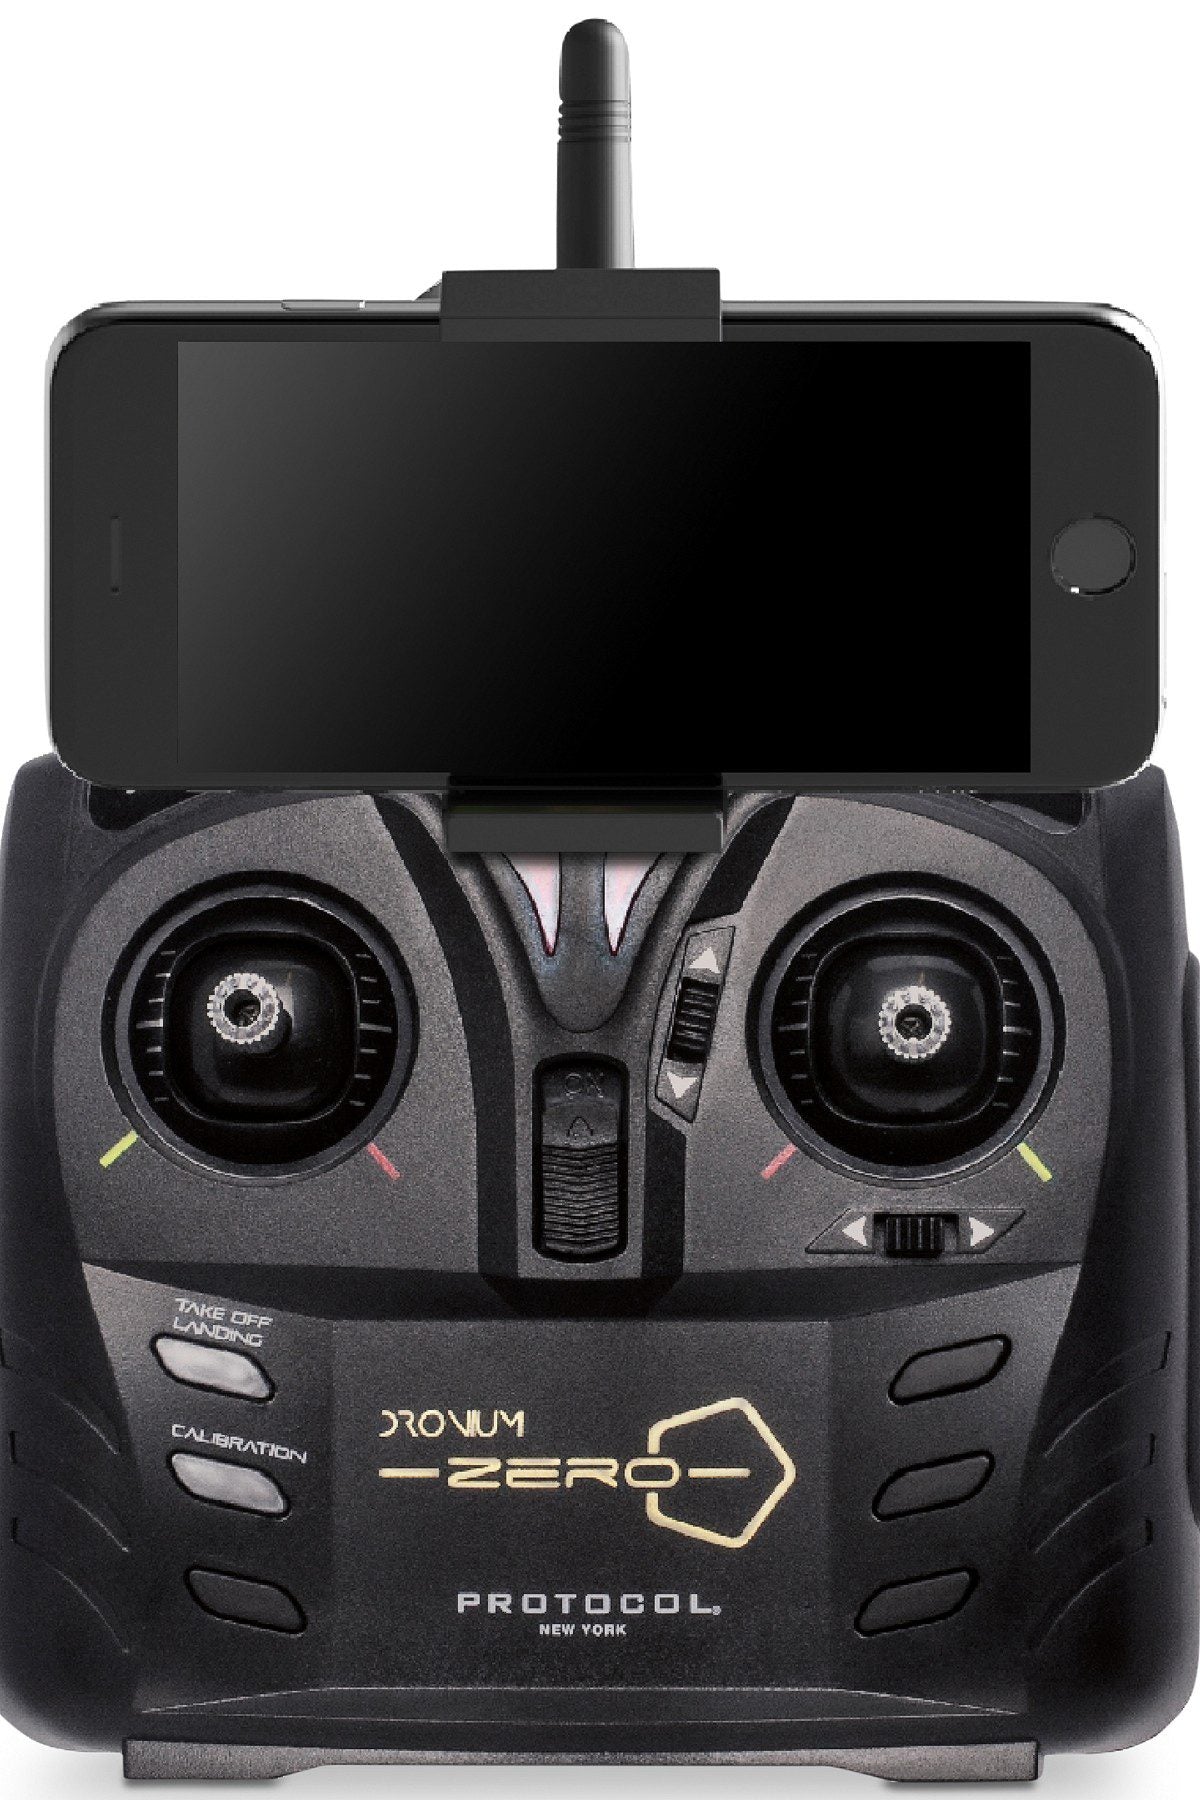 Dronium Zero Drone with Live Streaming Camera